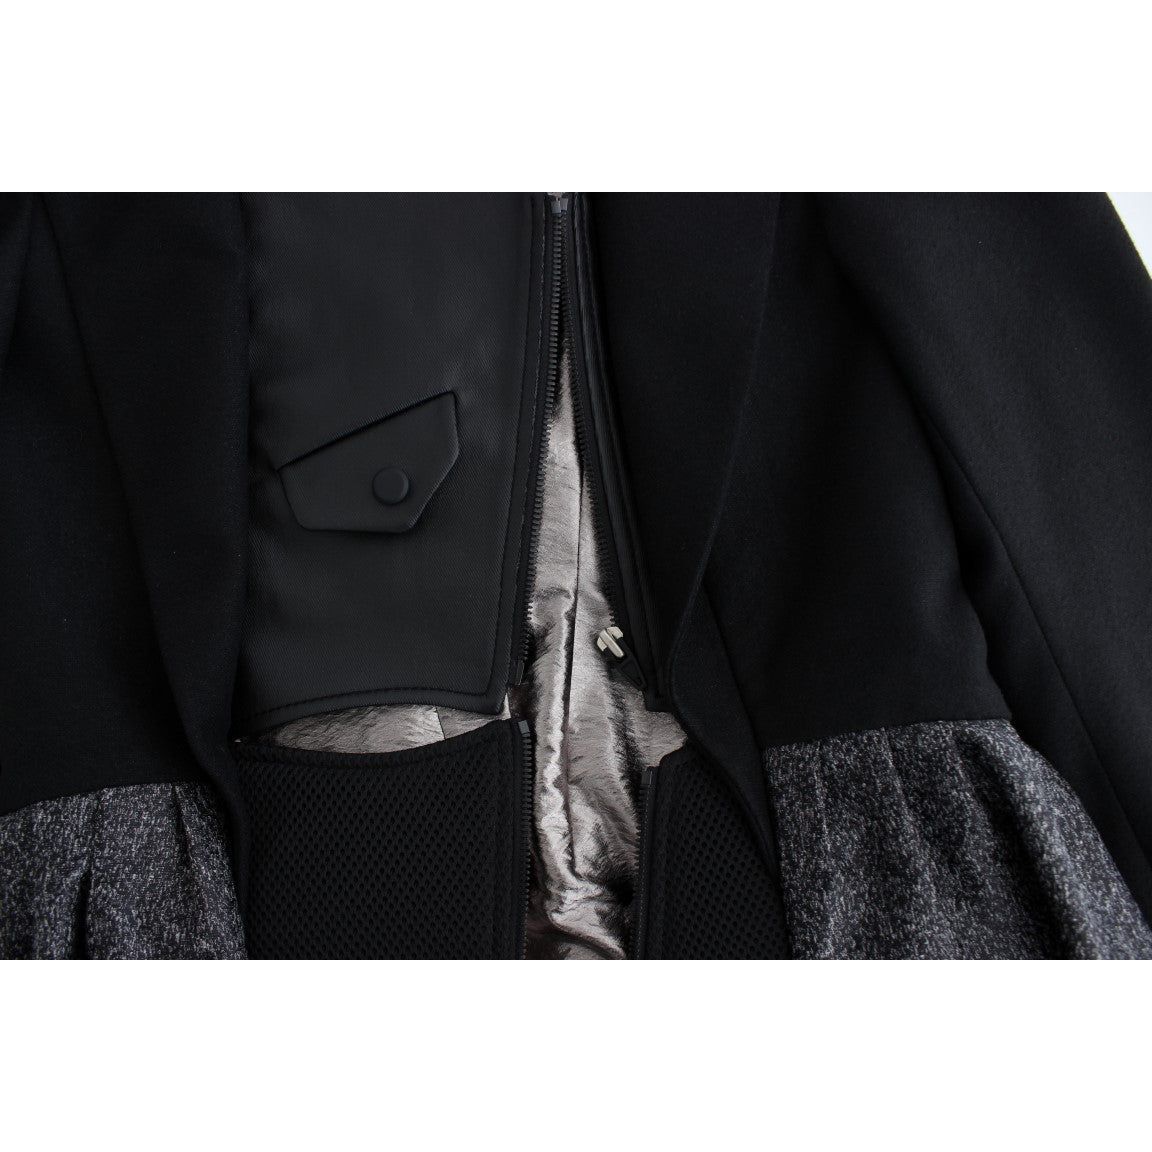 KAALE SUKTAE Elegant Monochrome Zippered Blazer Jacket black-short-blazer-coat-biker-jacket Coats & Jackets 188107-black-short-blazer-coat-biker-jacket-7.jpg